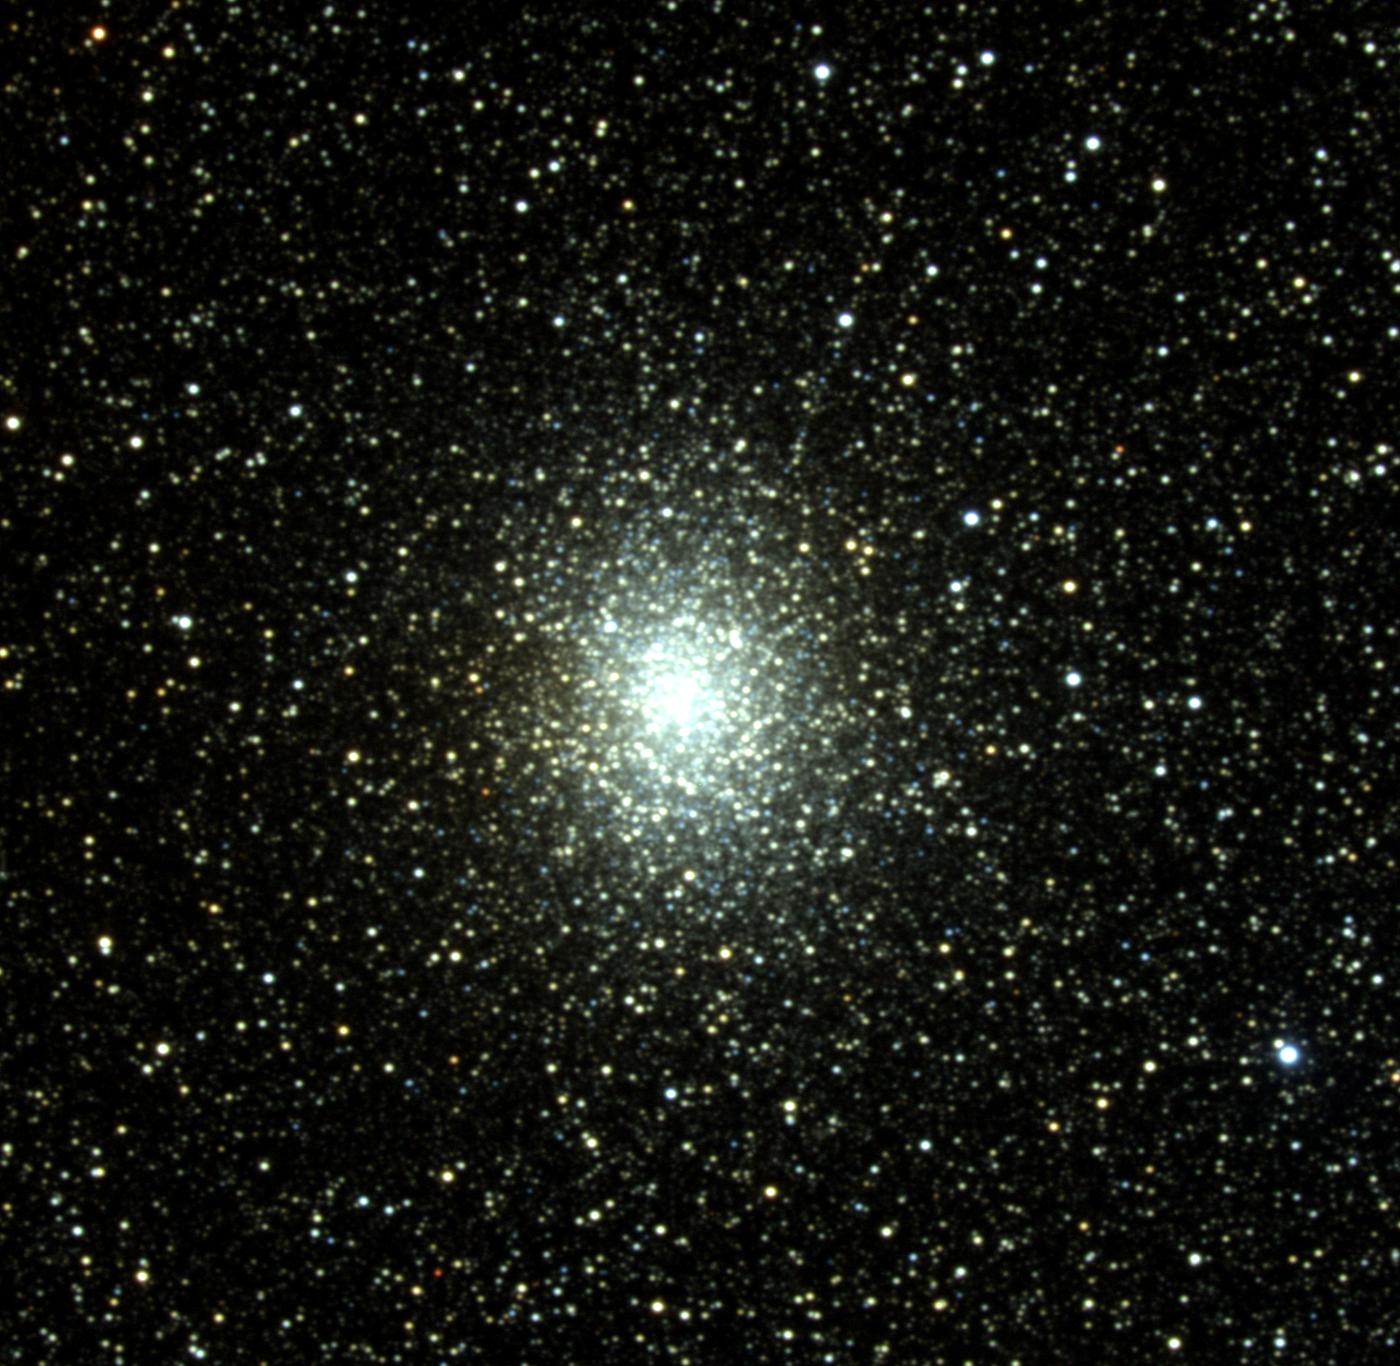 APOD: 2000 July 19 - Globular Cluster M19 